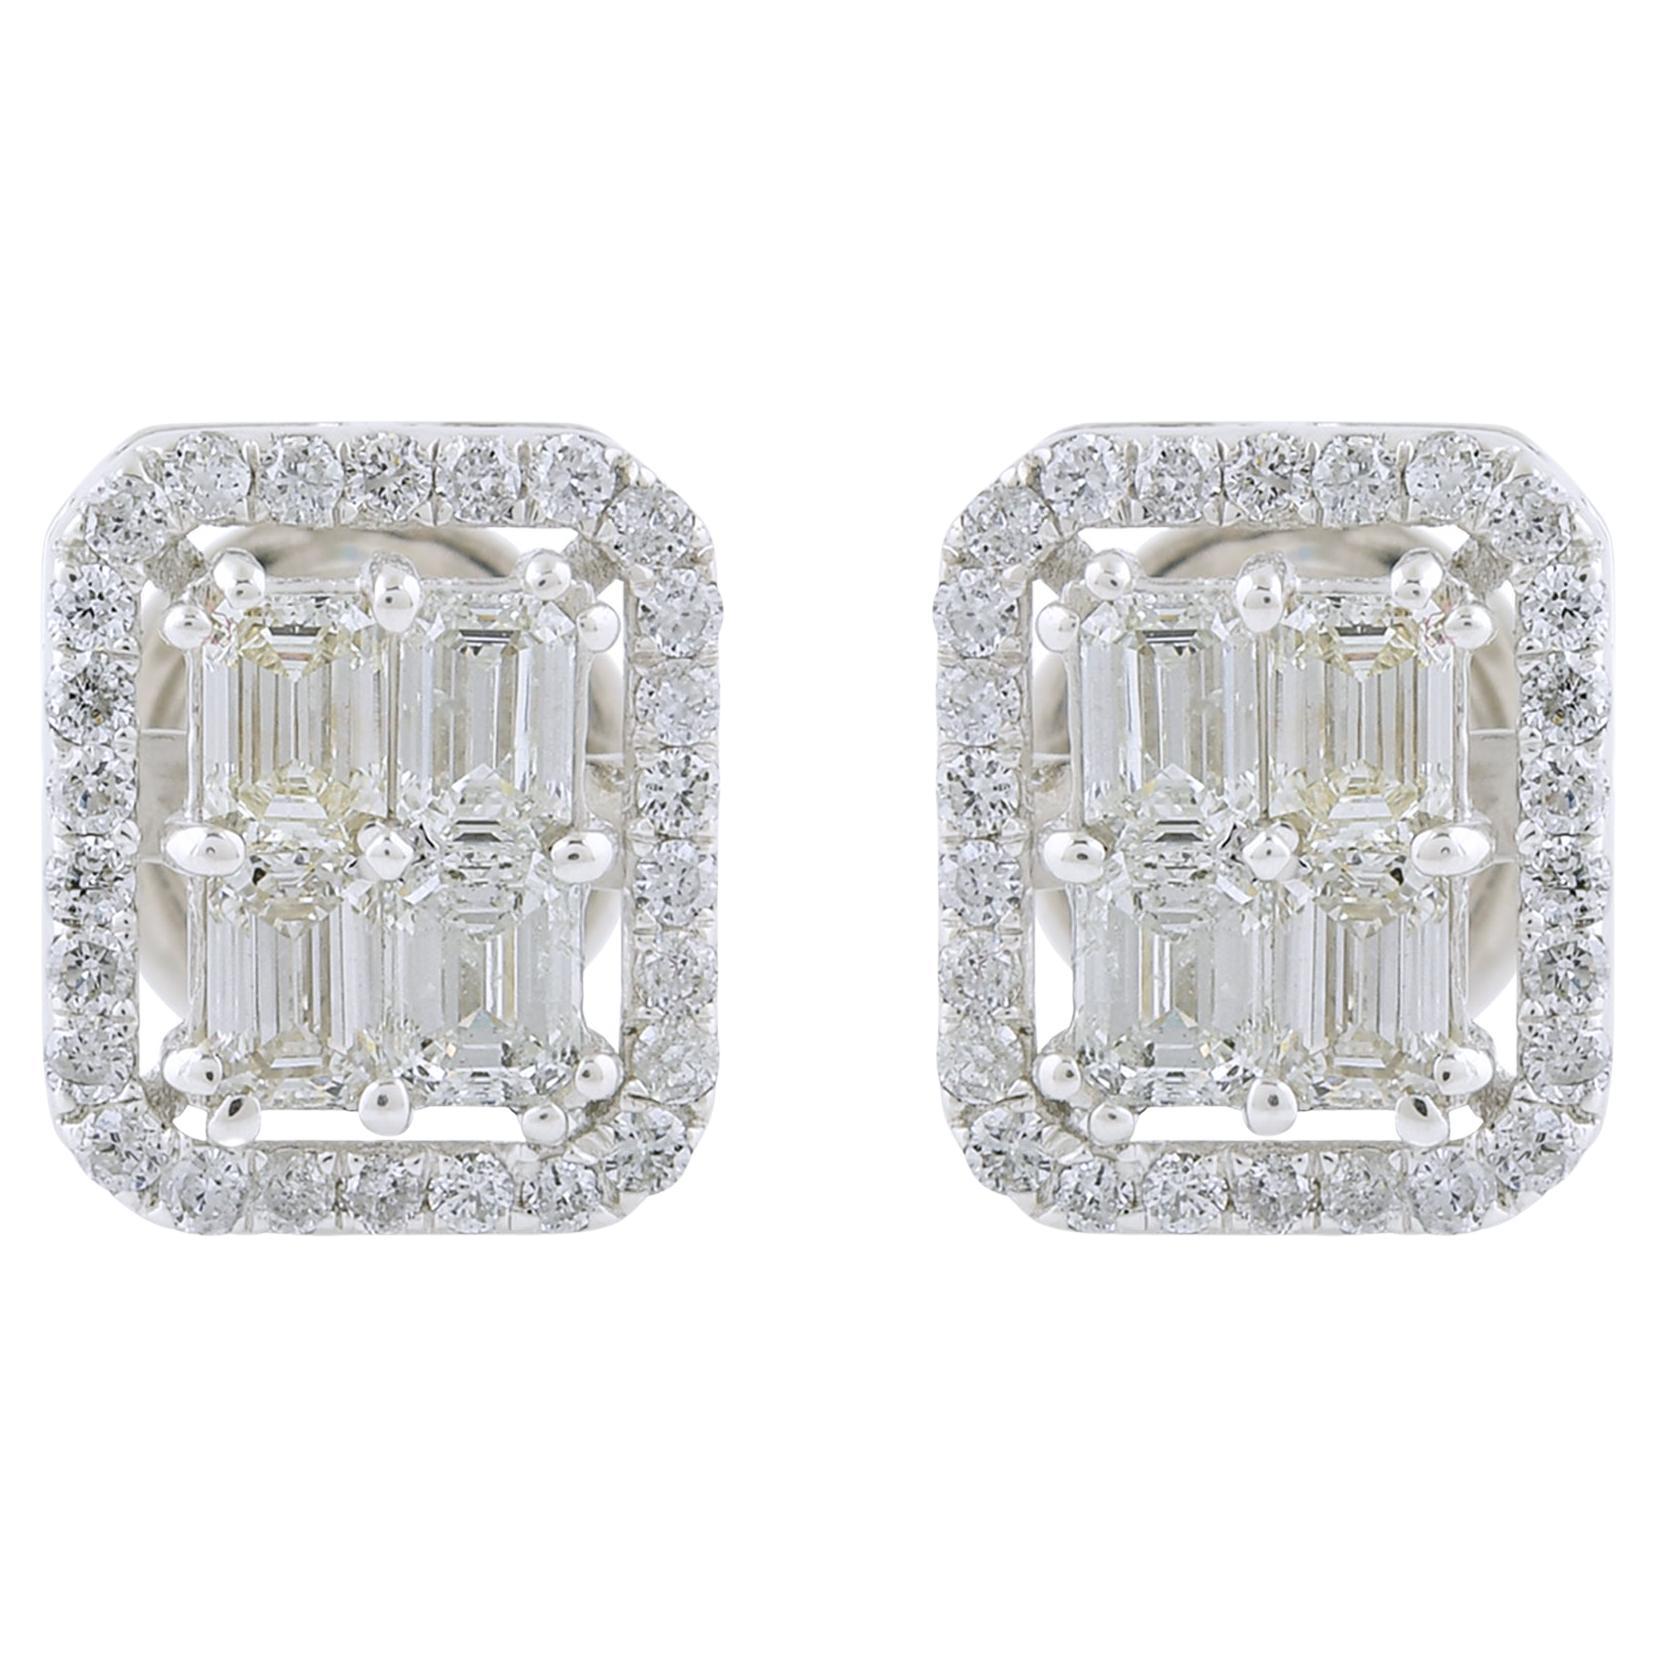 1.08 Carat SI Clarity HI Color Emerald Cut Diamond Stud Earrings 18k White Gold